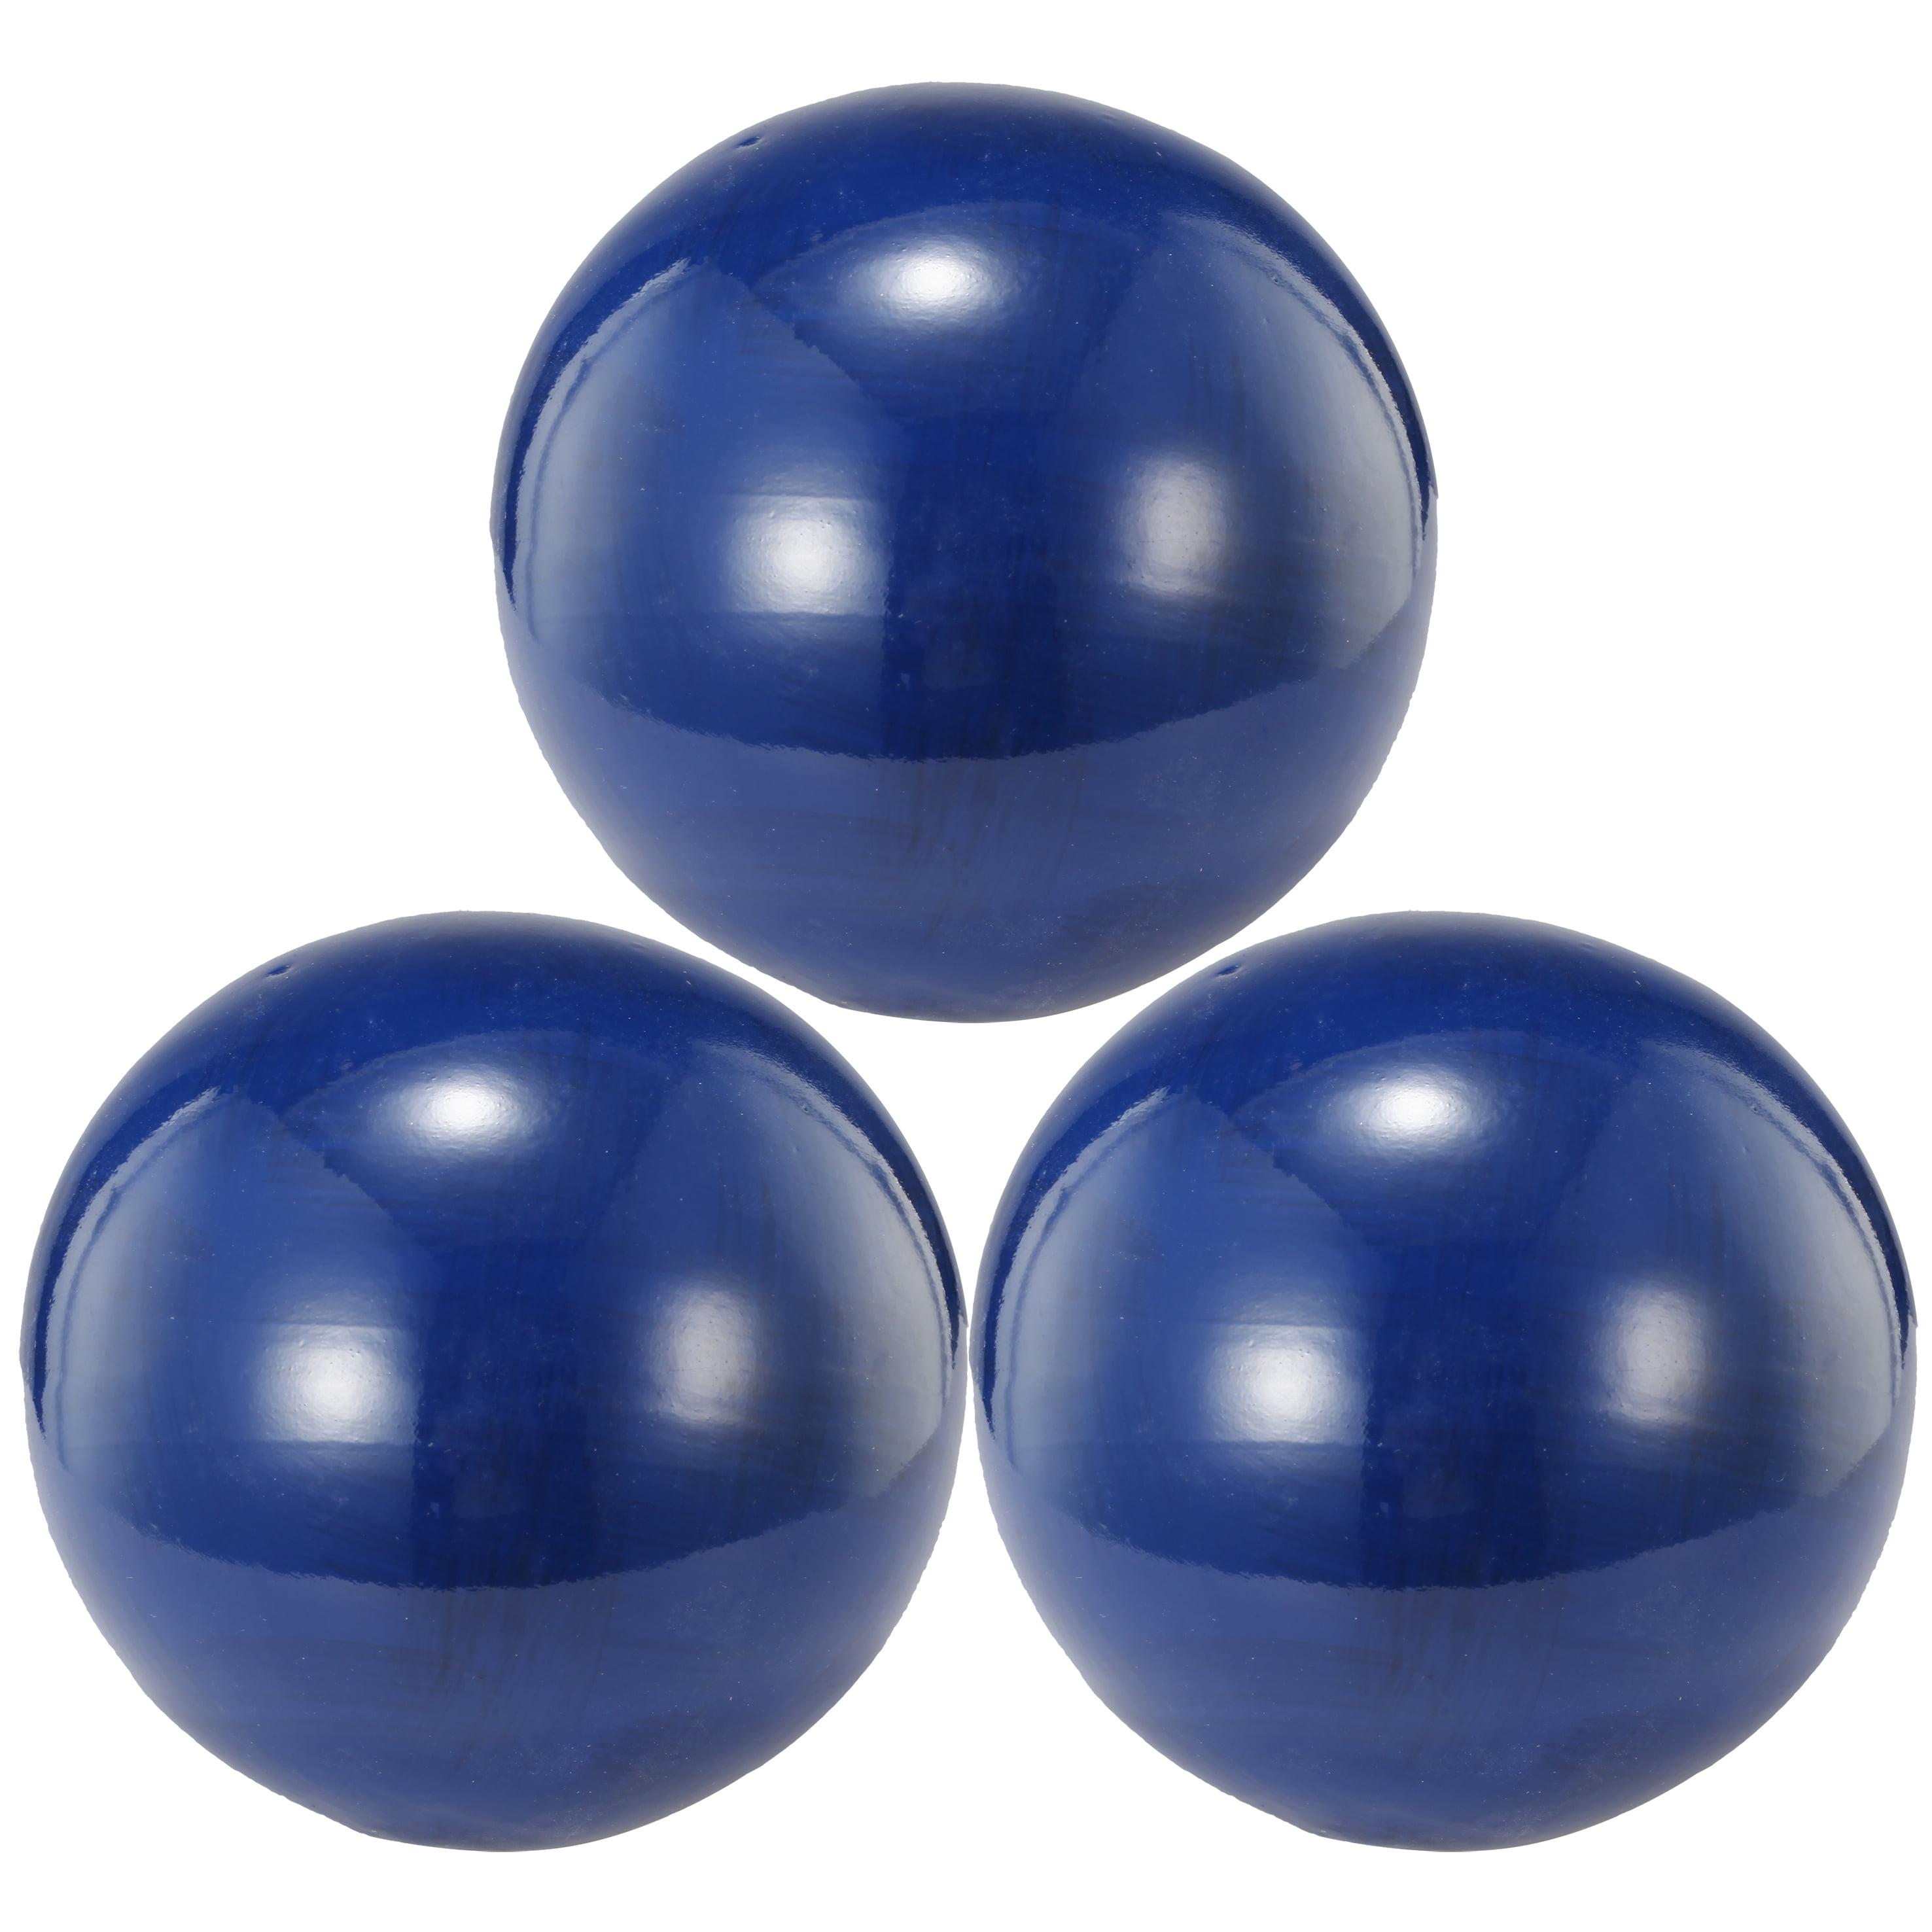 Plain Decorative Ceramic Balls, Set of Three, Glossy Blue - Walmart.com